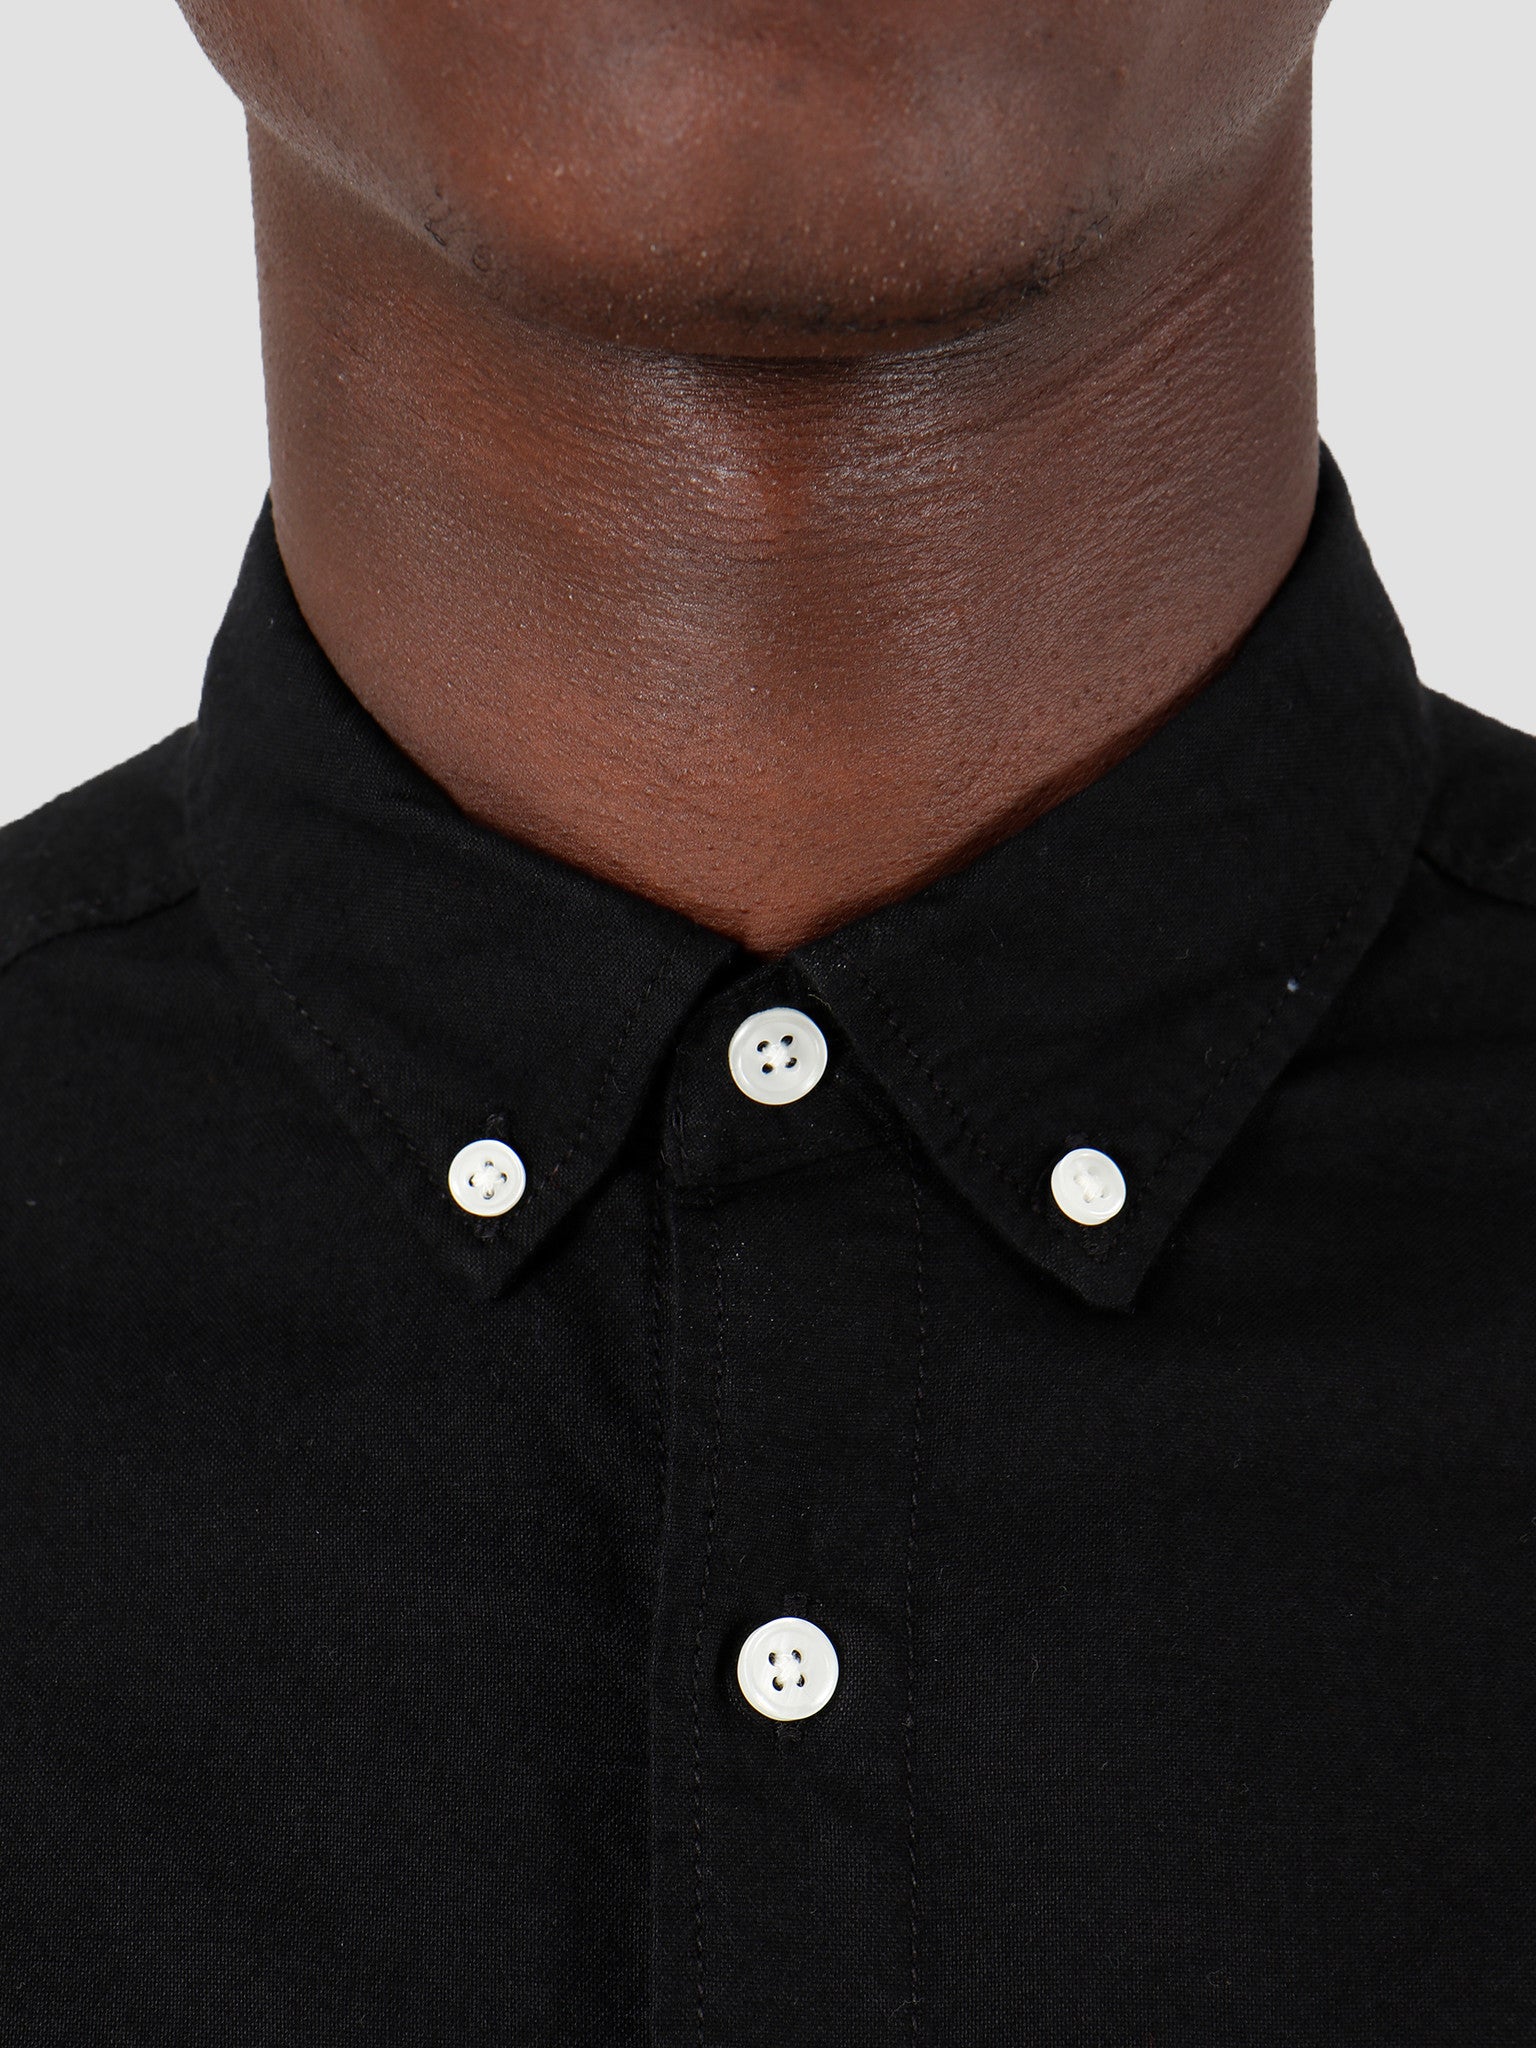 QB40 Oxford Shirt Black